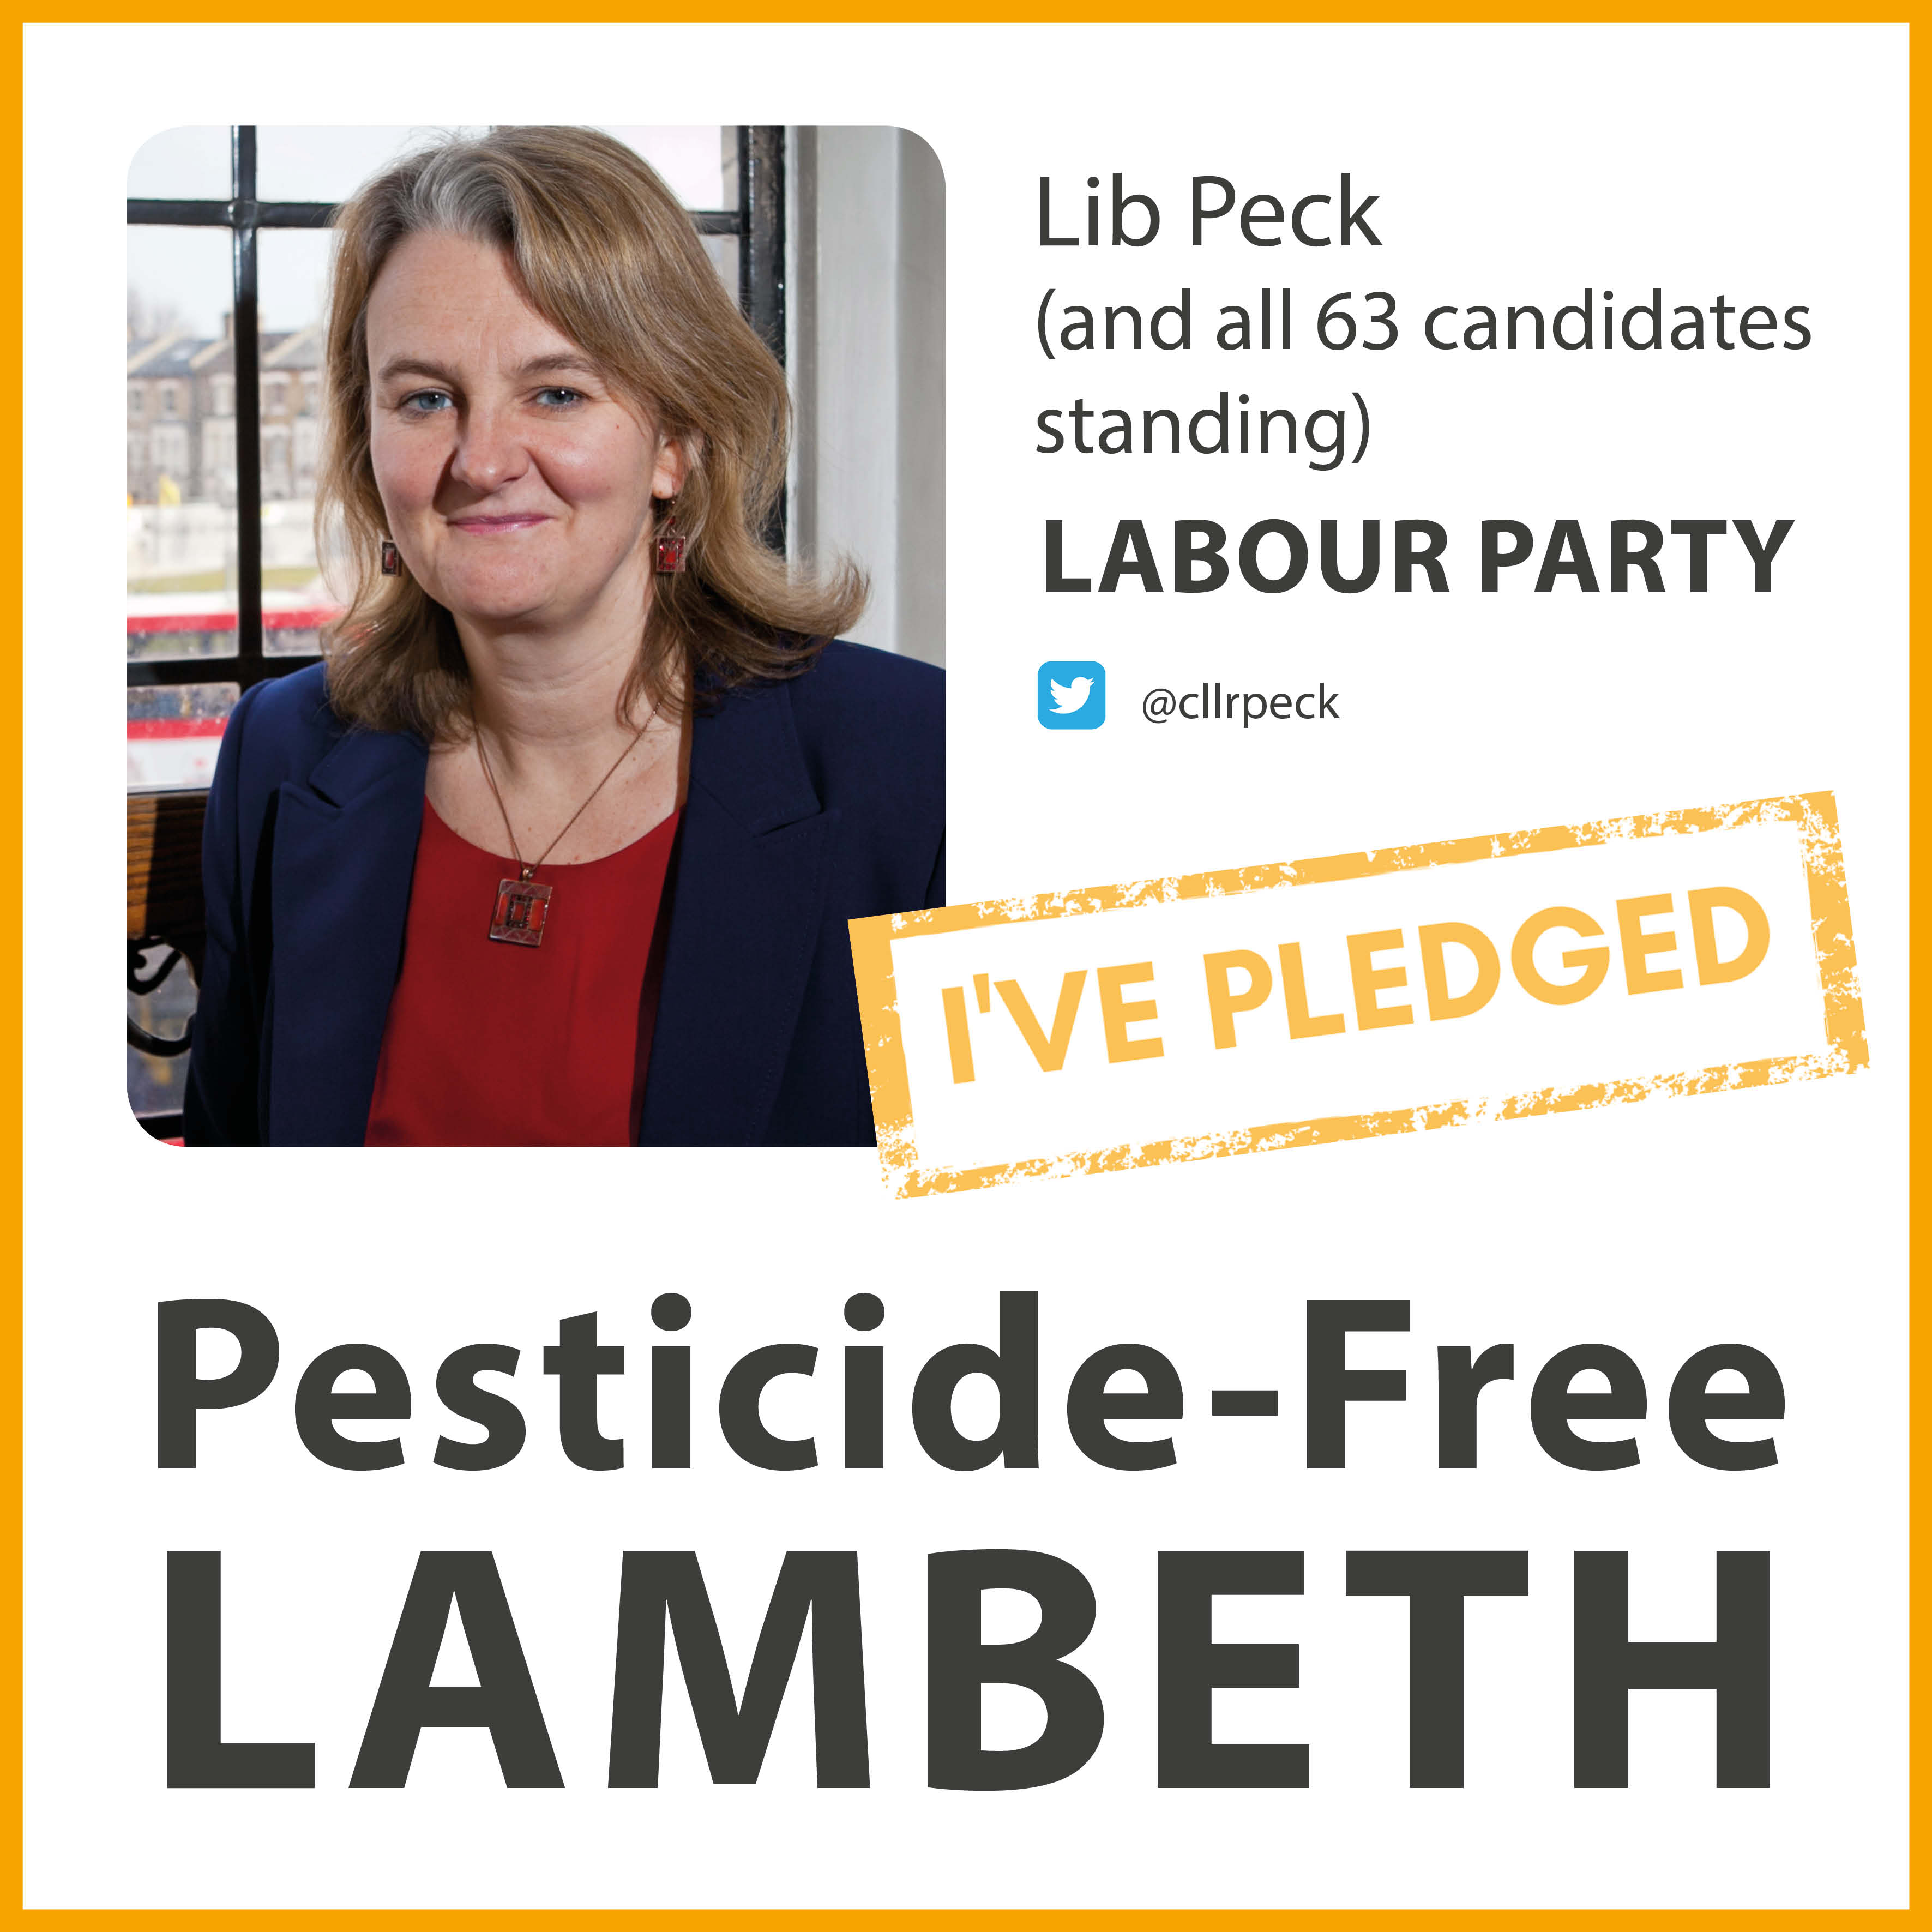 Lib Peck has taken the pesticide-free pledge in Lambeth